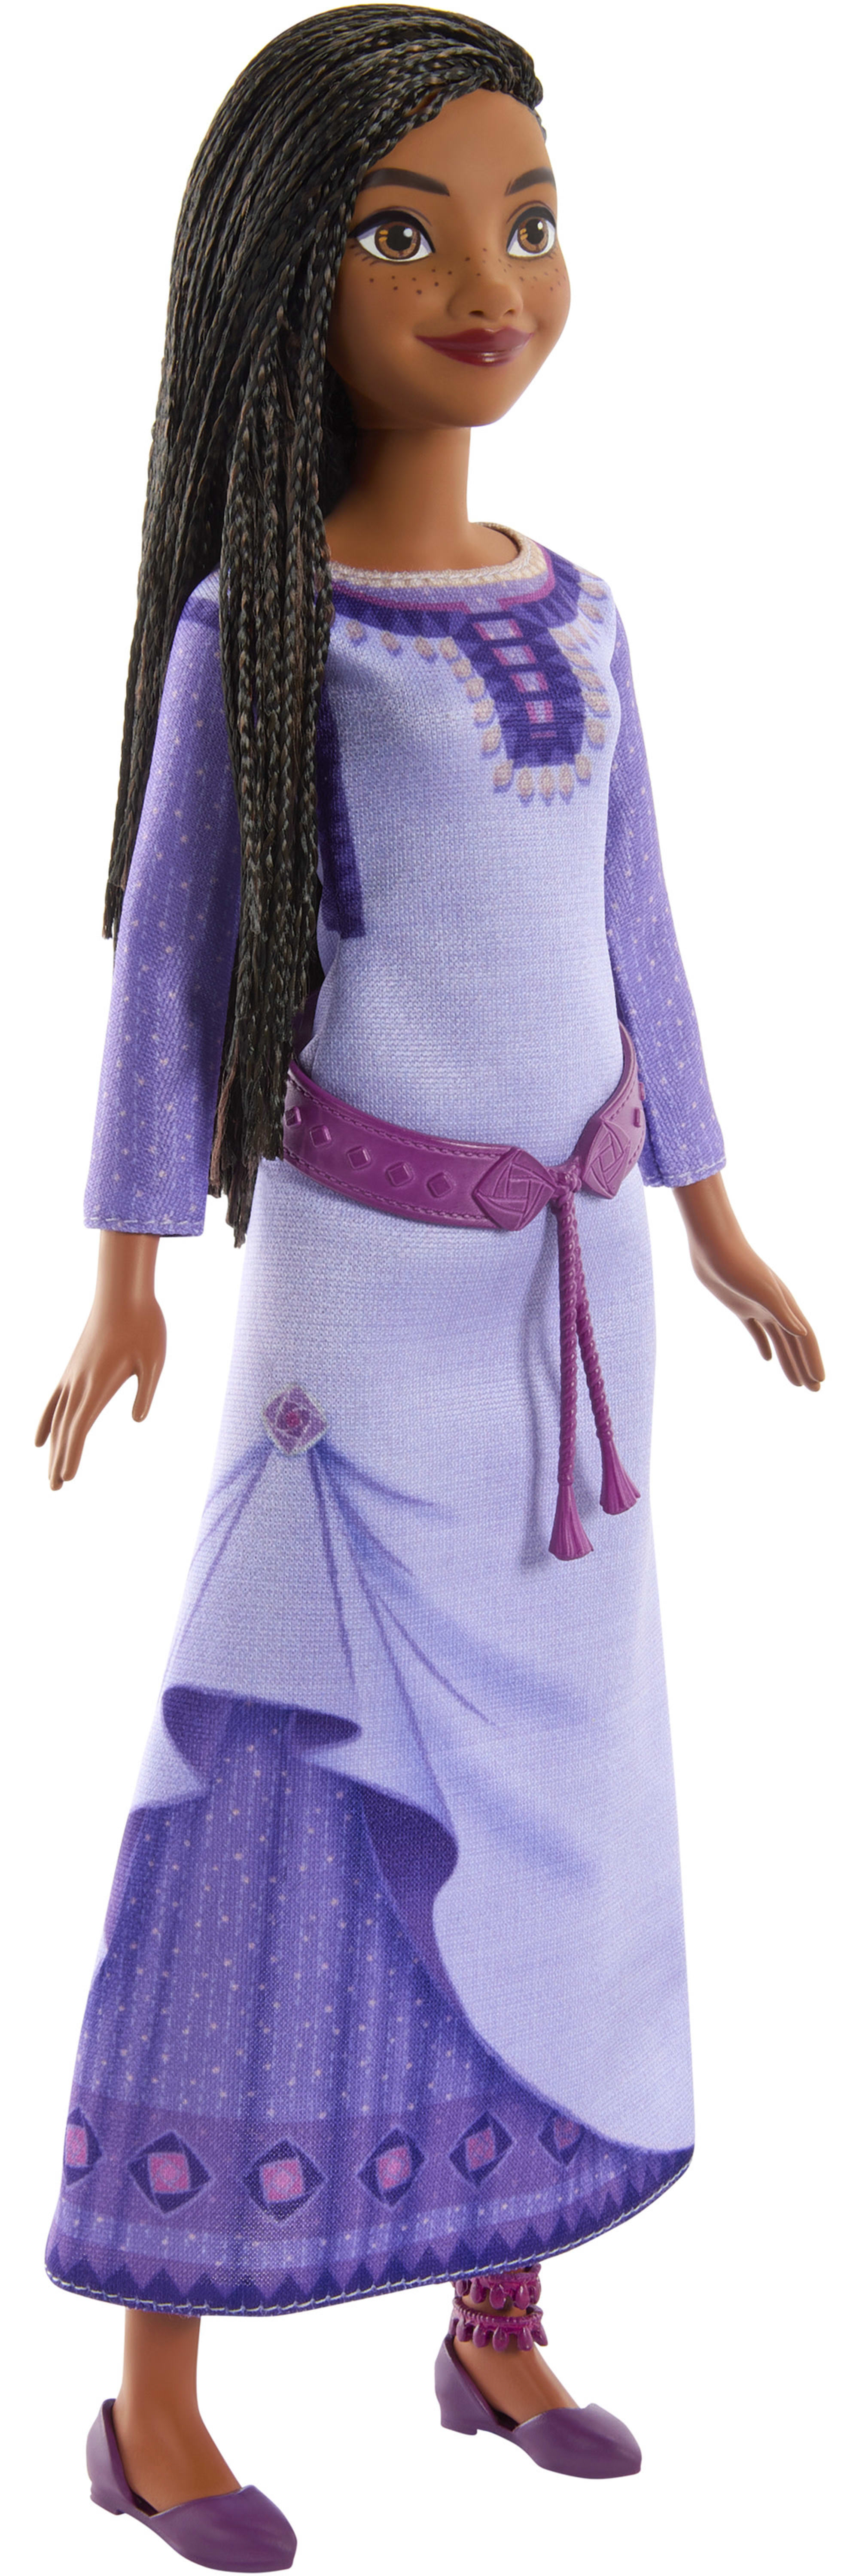 Disney Removable Clothes Fashion Dolls